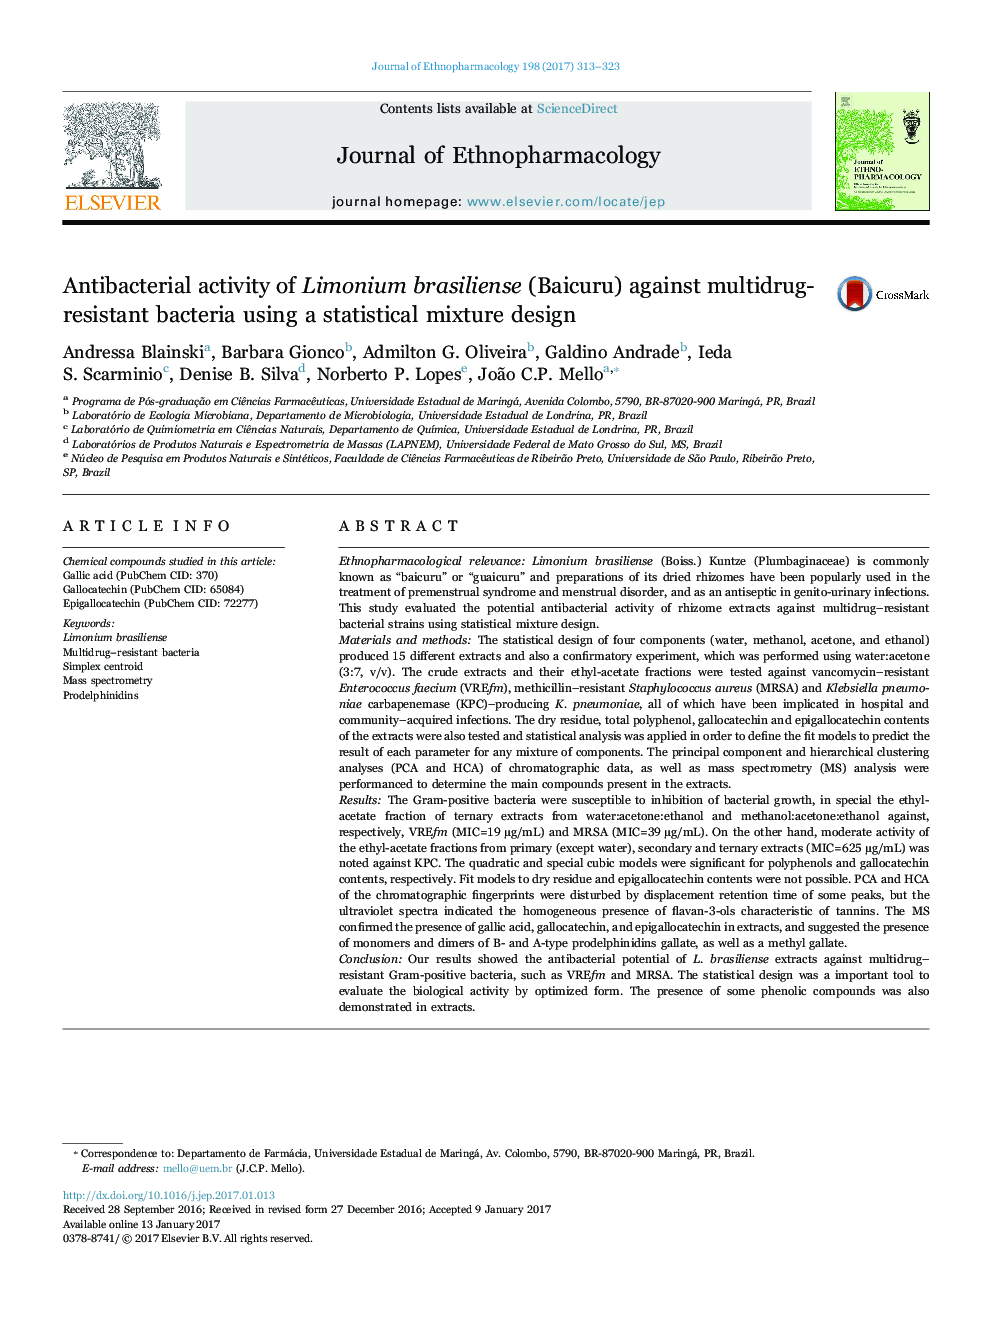 Antibacterial activity of Limonium brasiliense (Baicuru) against multidrug-resistant bacteria using a statistical mixture design